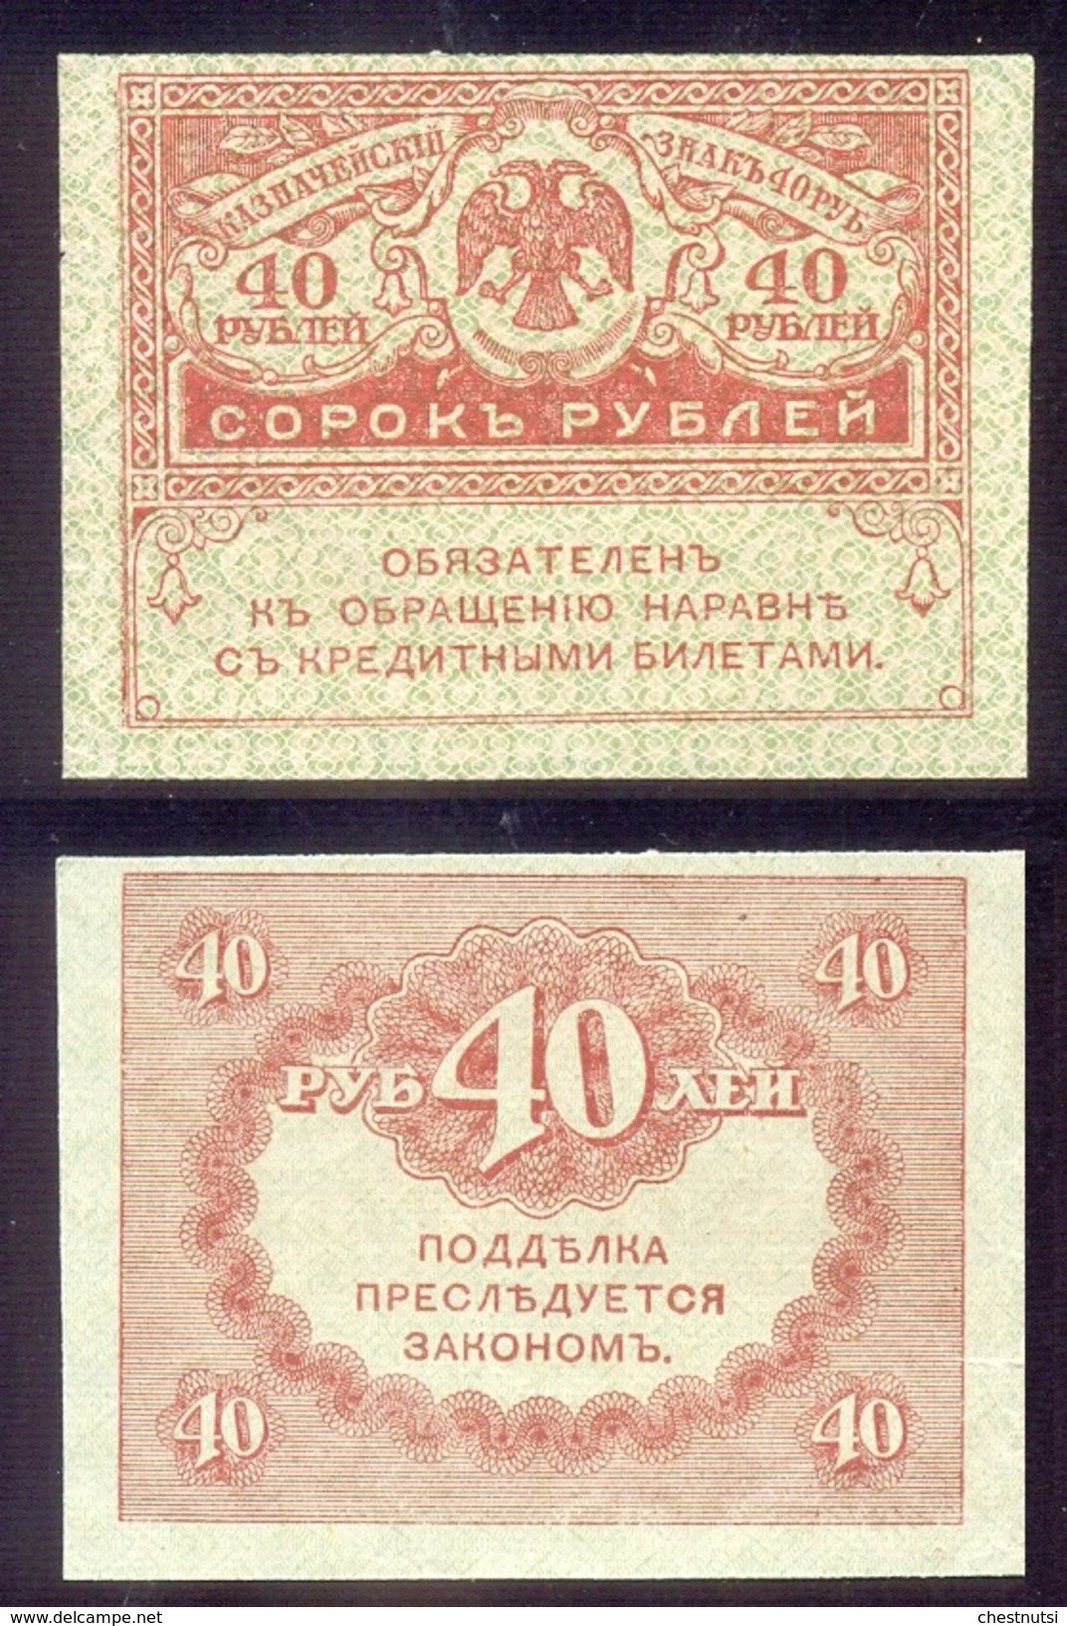 Russia 40 Rubles ND(1917) P42 AUNC - Russia